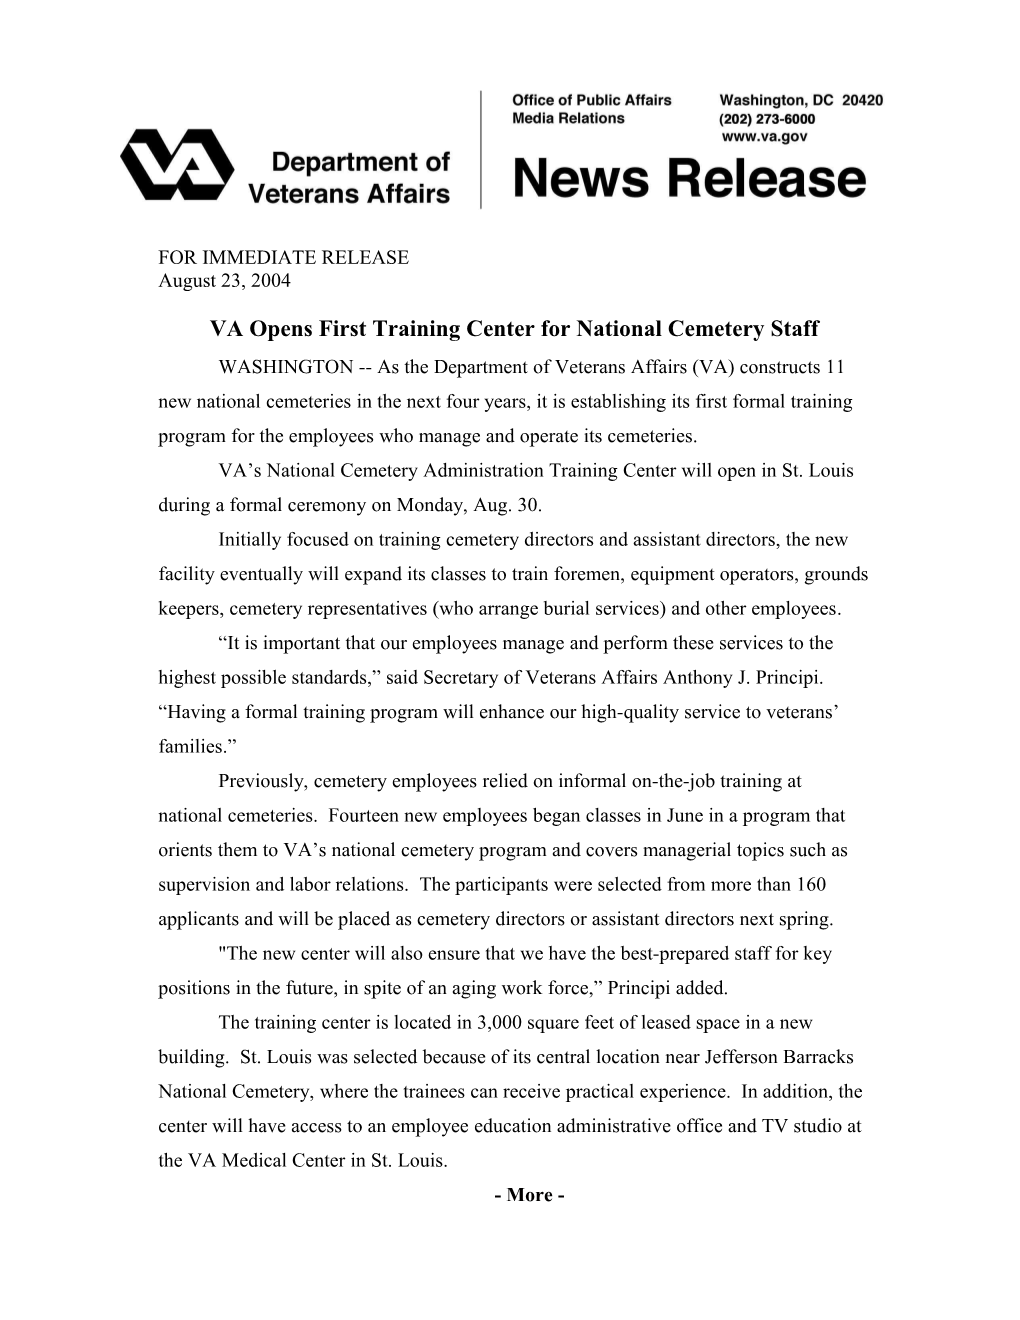 VA Opensfirsttrainingcenter for Nationalcemetery Staff